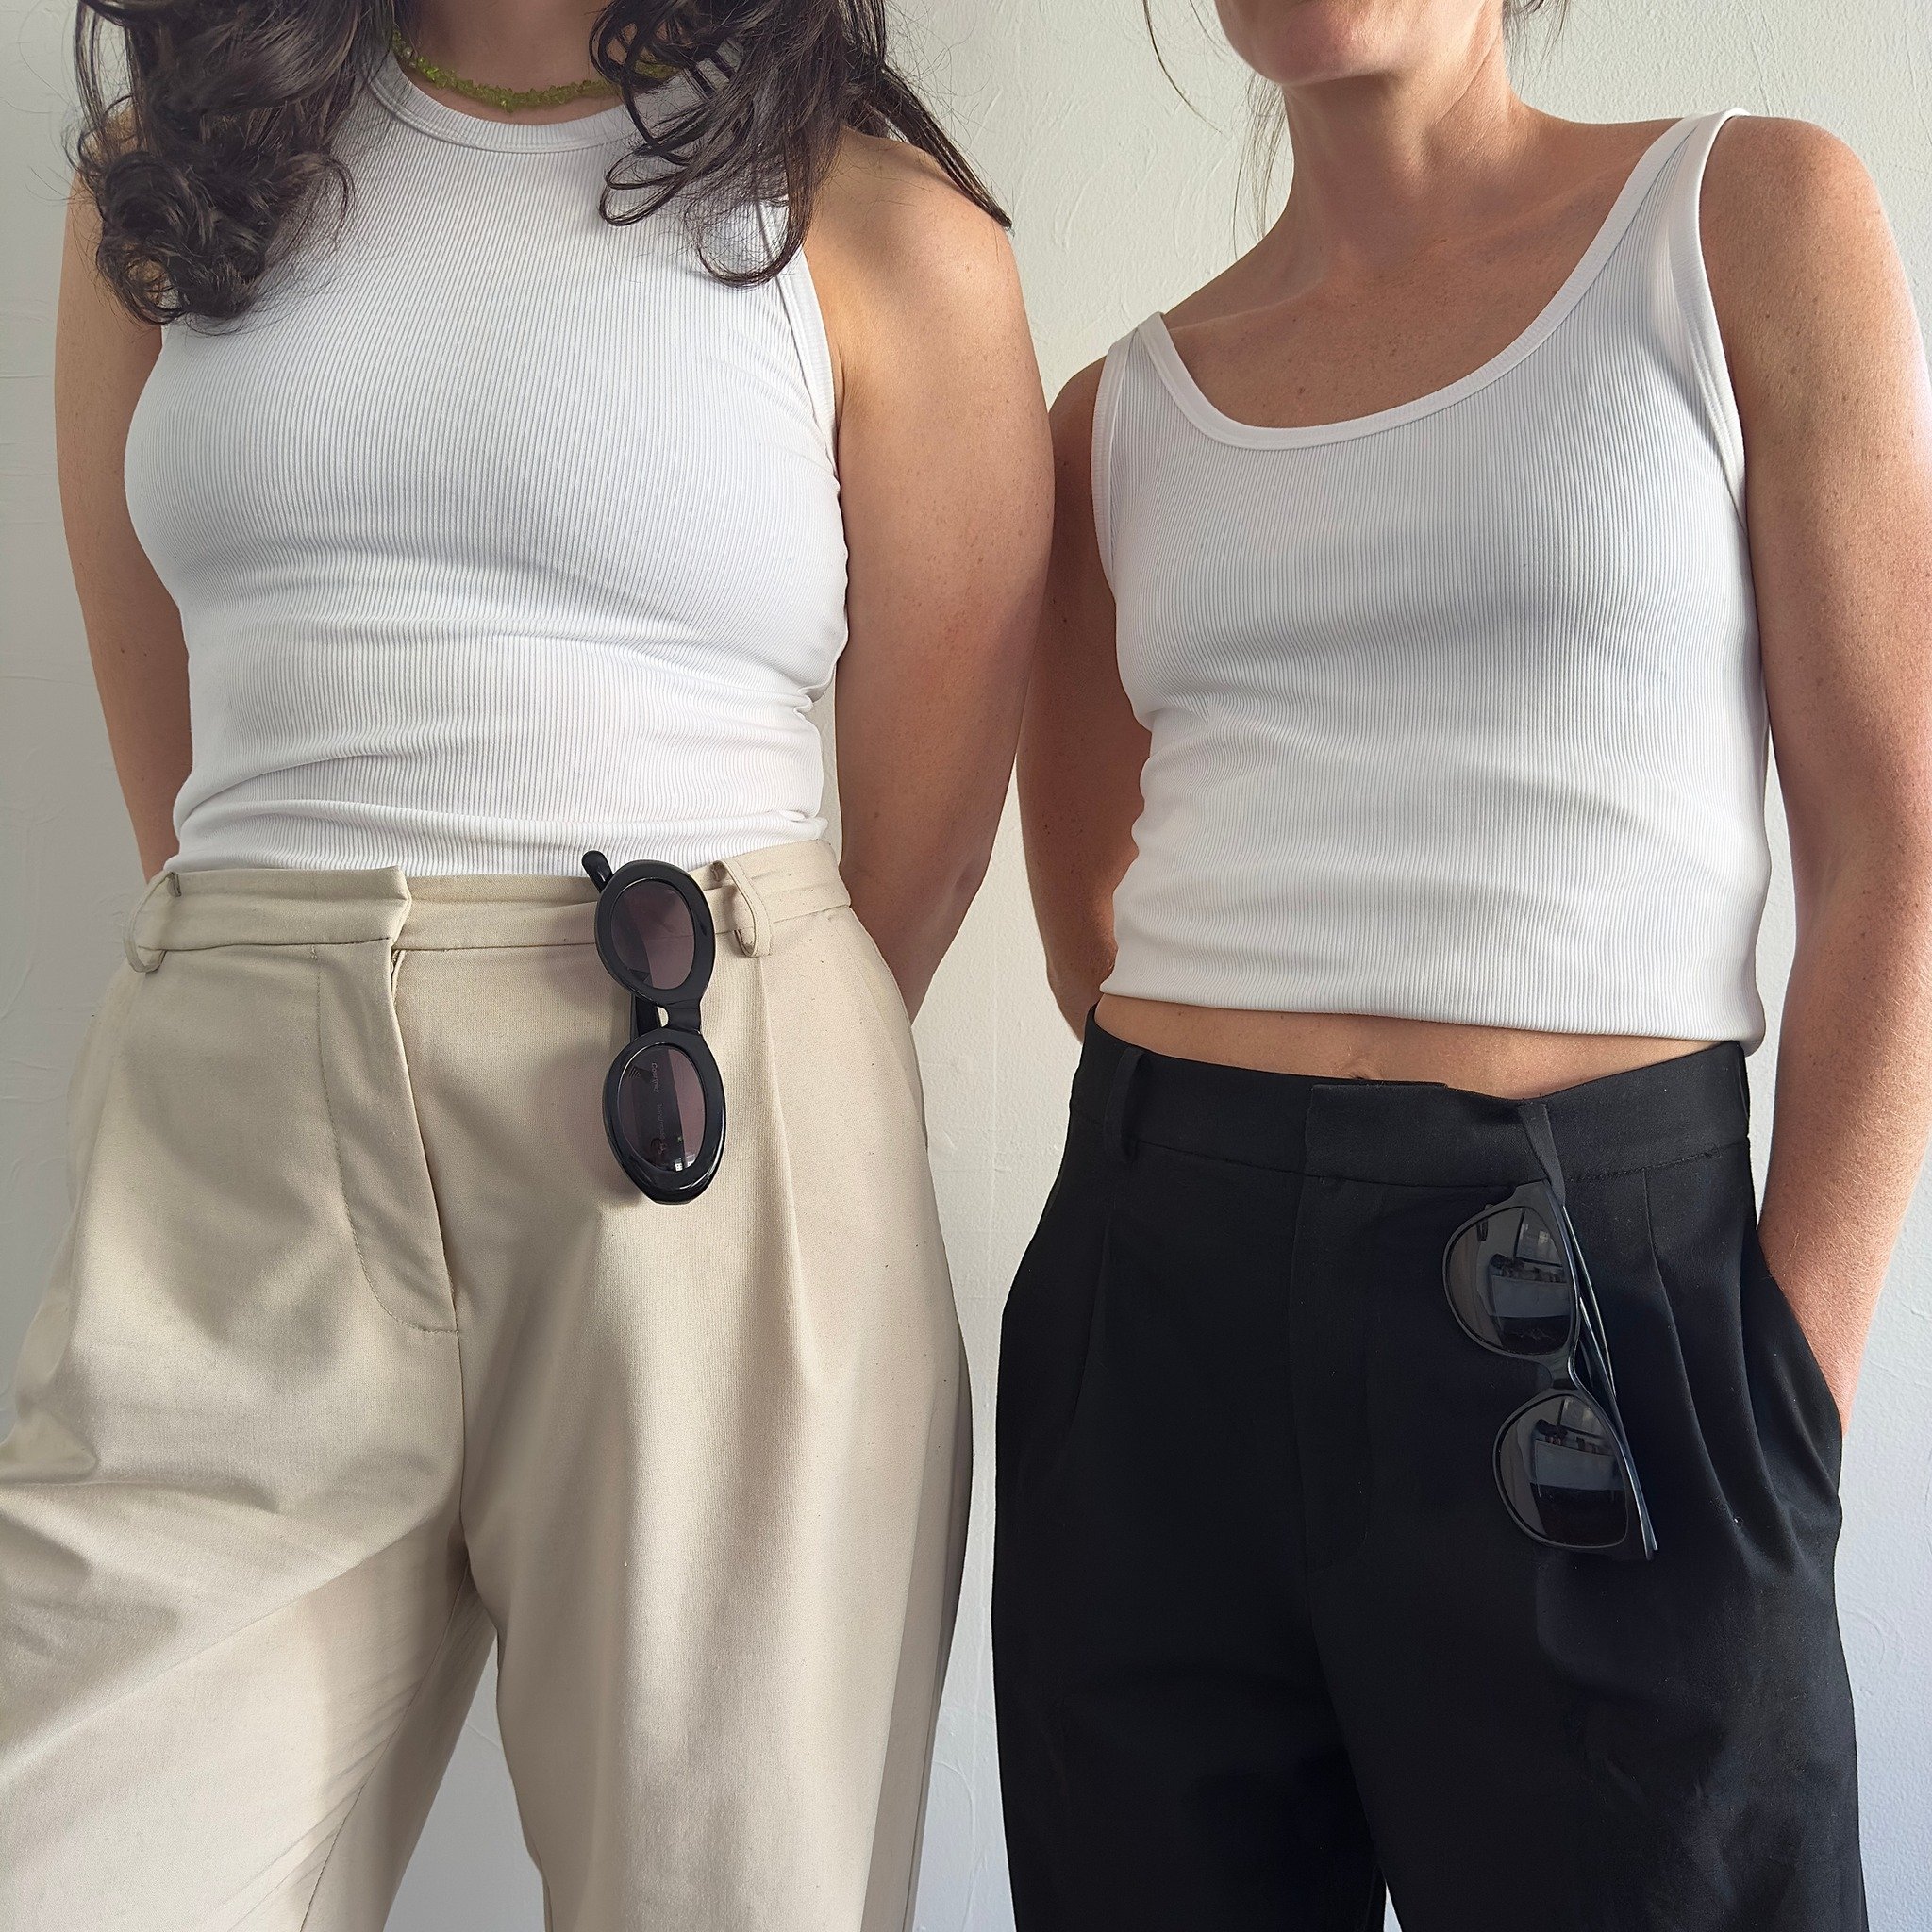 Boody Body EcoWear Women's Long Sleeve Top - White, X-Large 